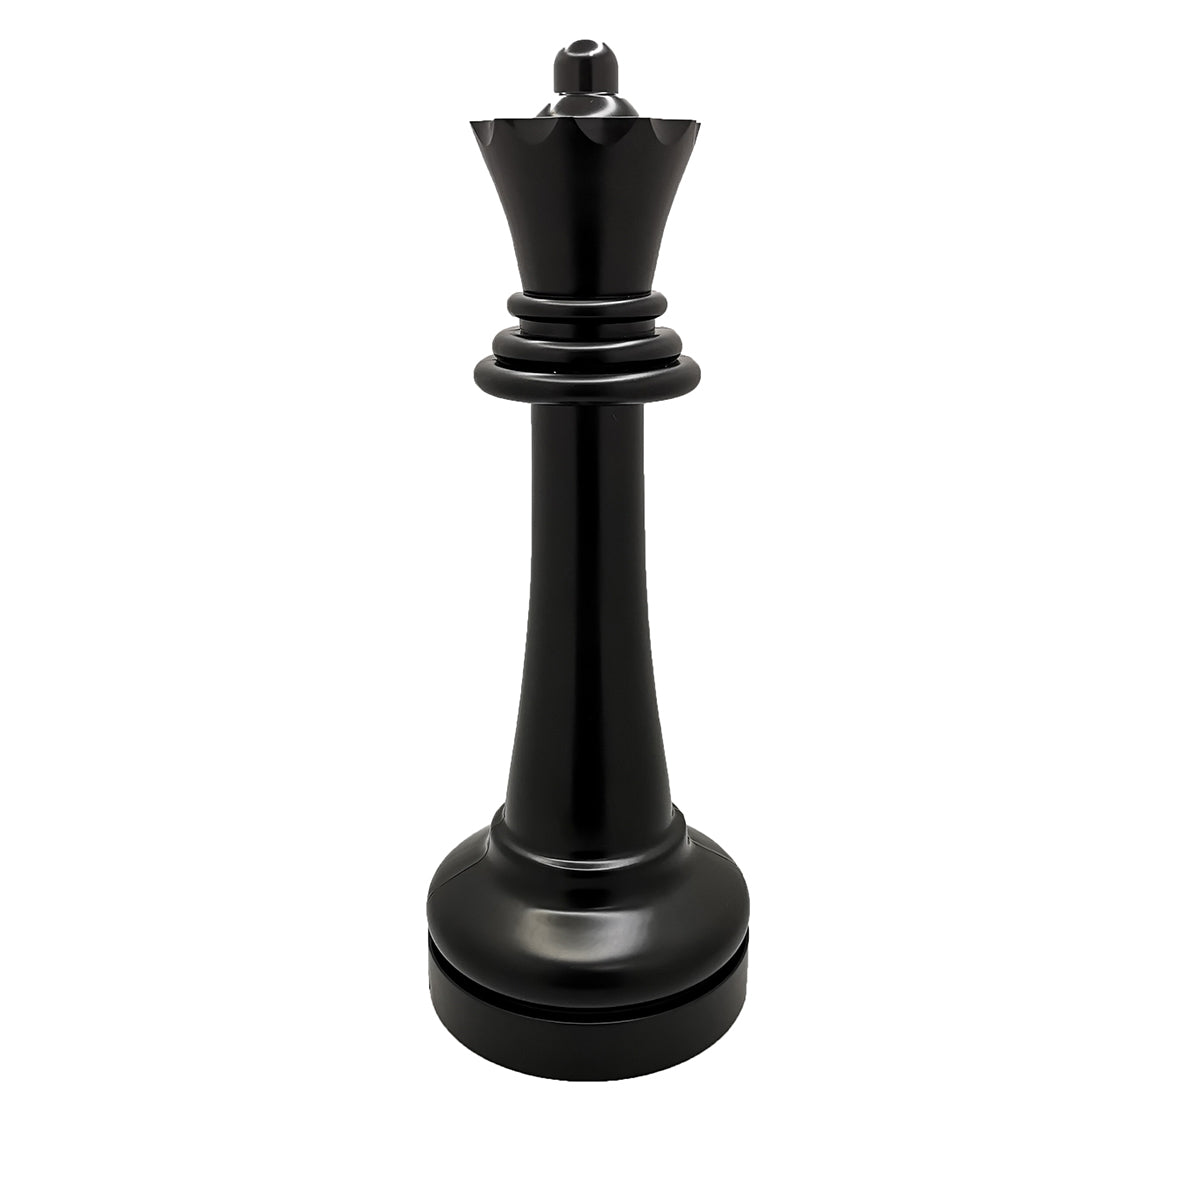 Giant Garden Chess 43cm Replacement Pieces Black Queen